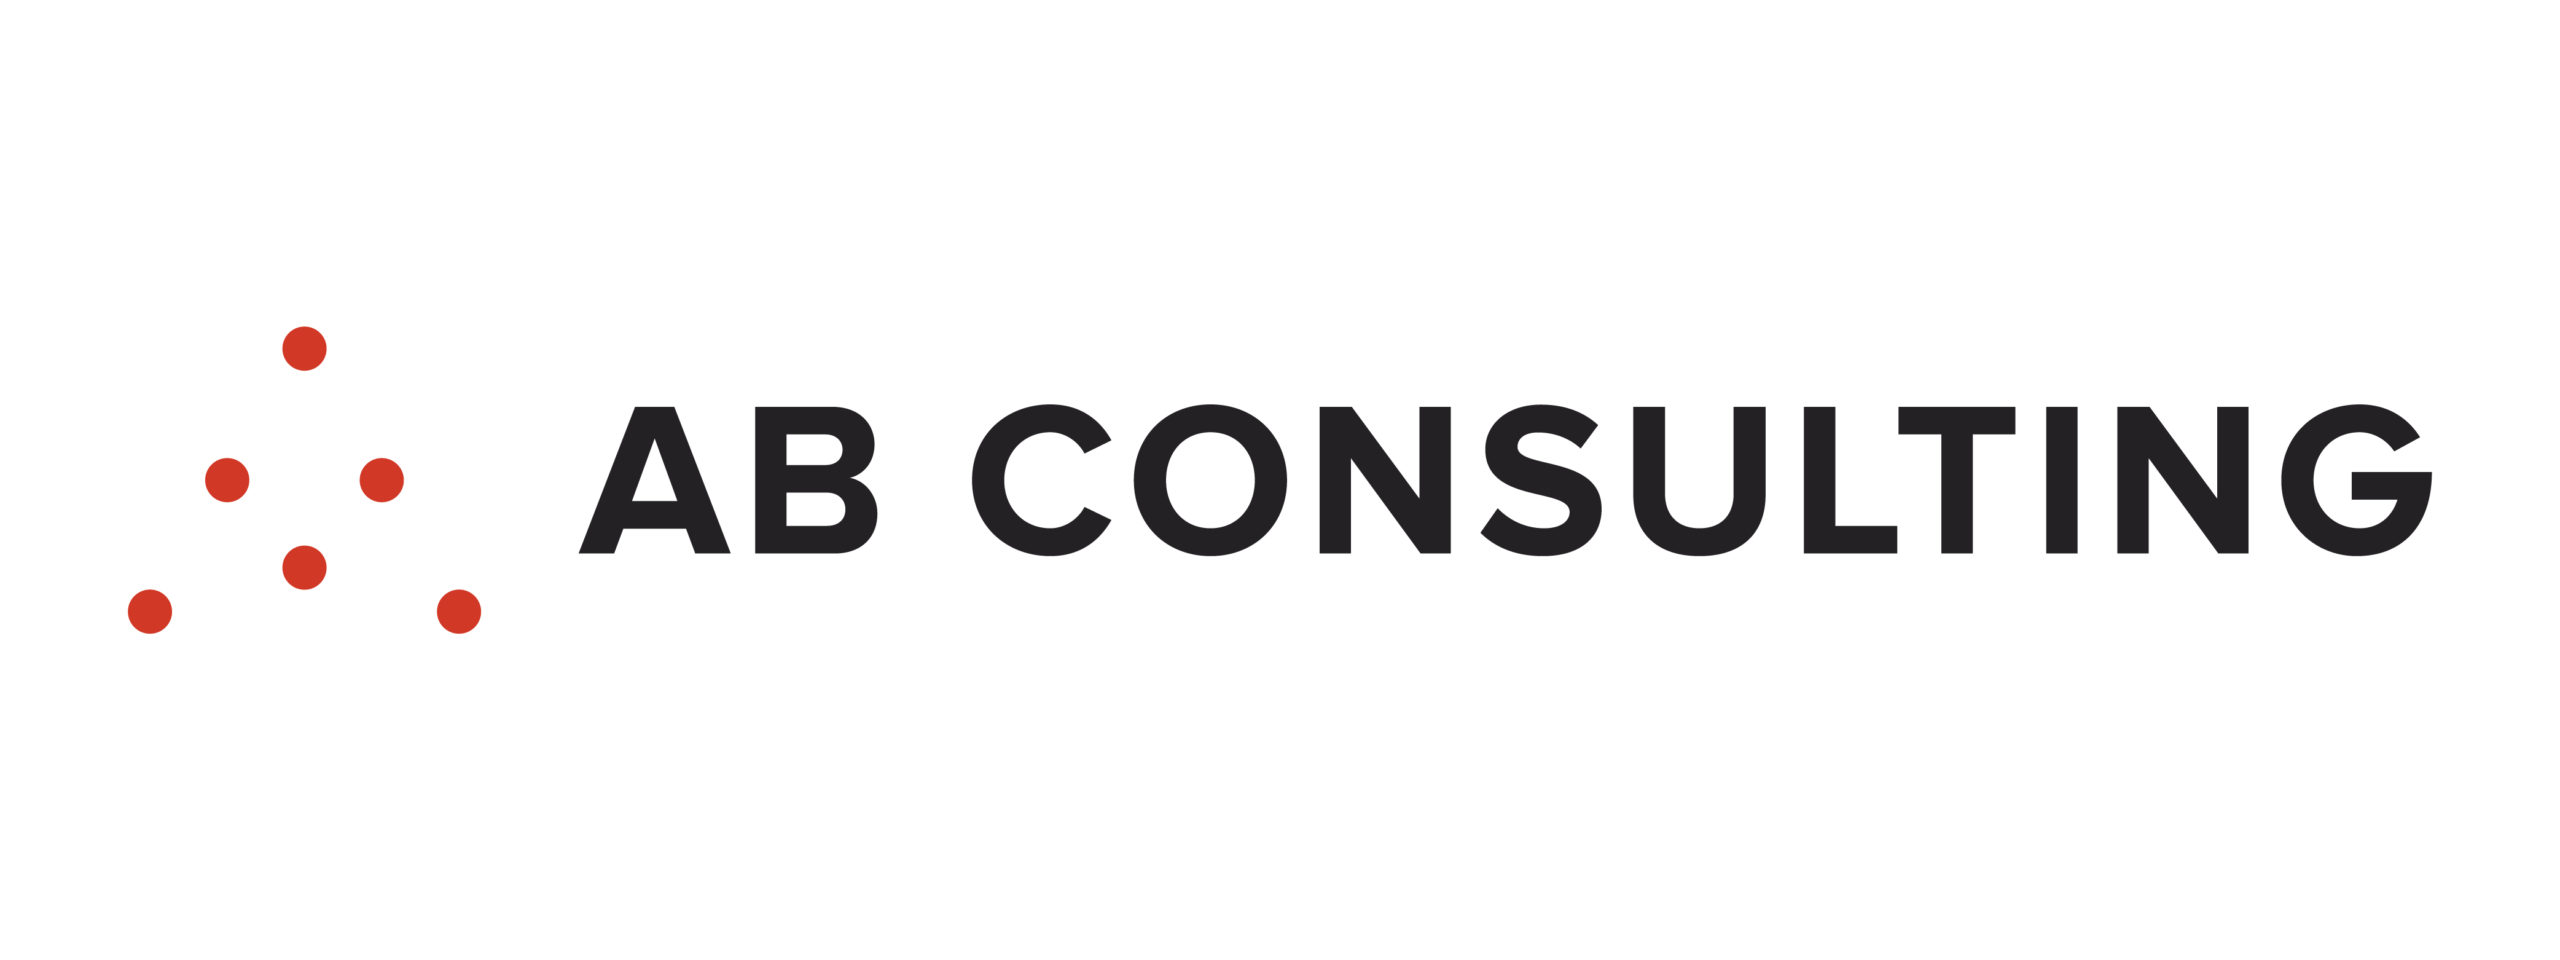 AB Consulting_Master_Logo_Horiz_Full Color